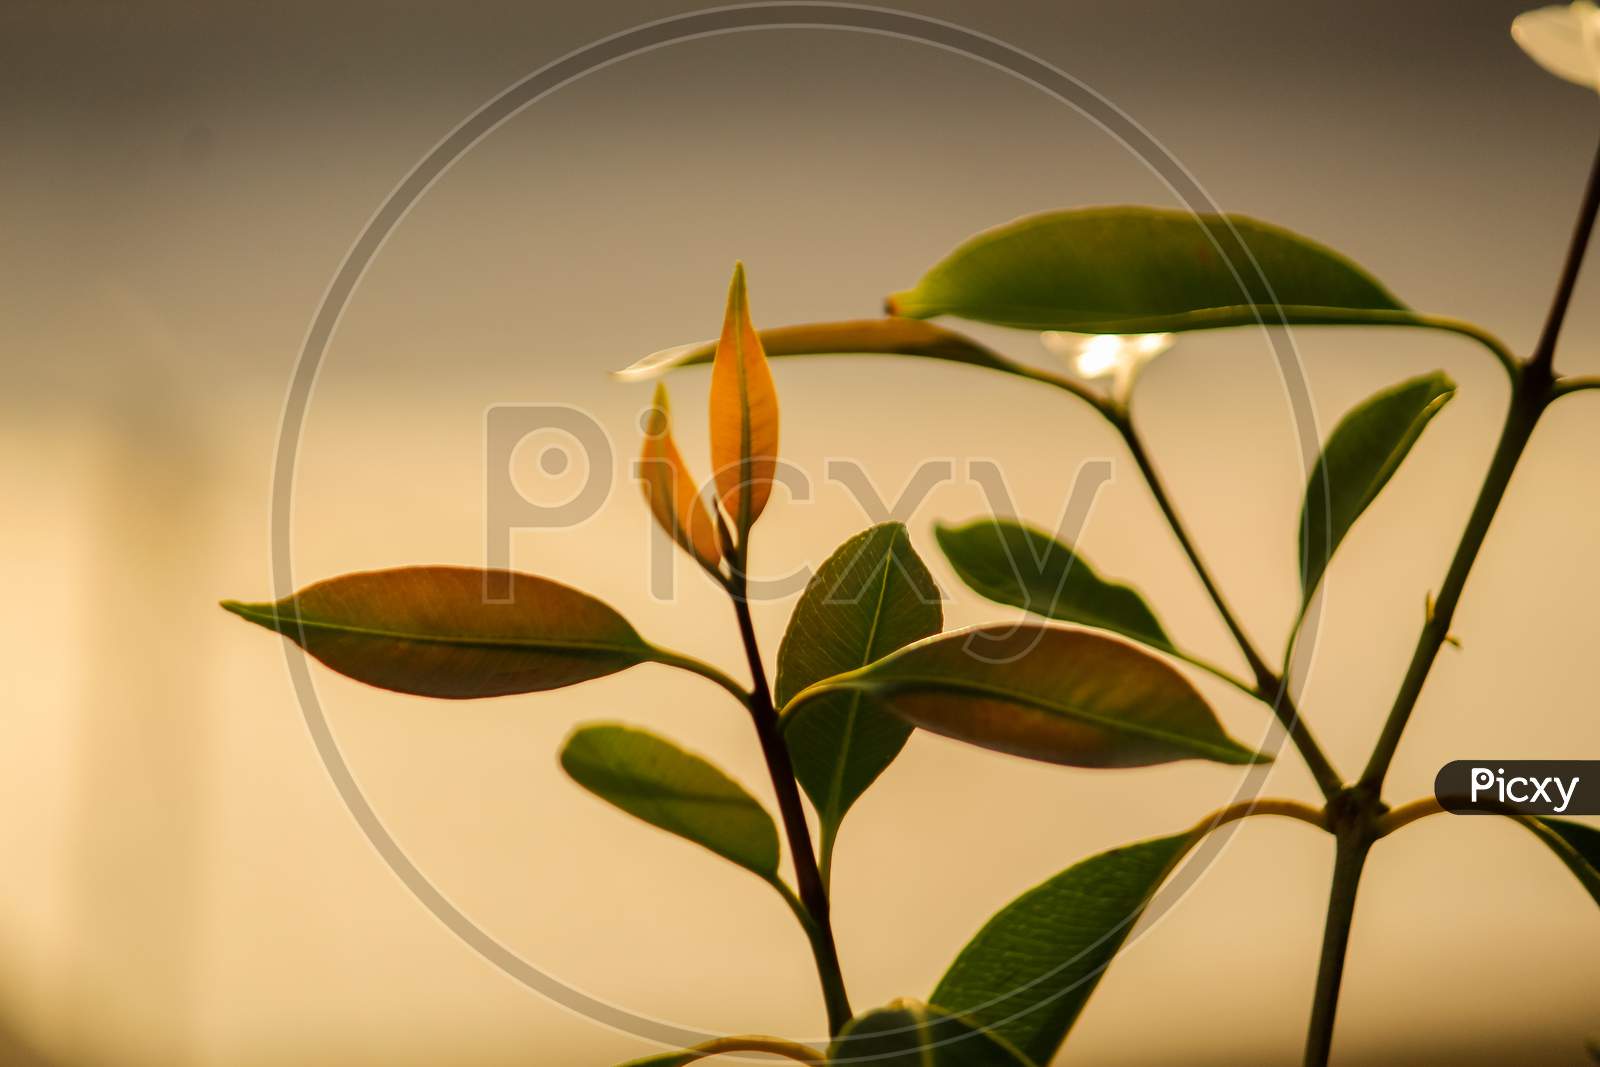 Small Orange leaf with beautiful bokeh